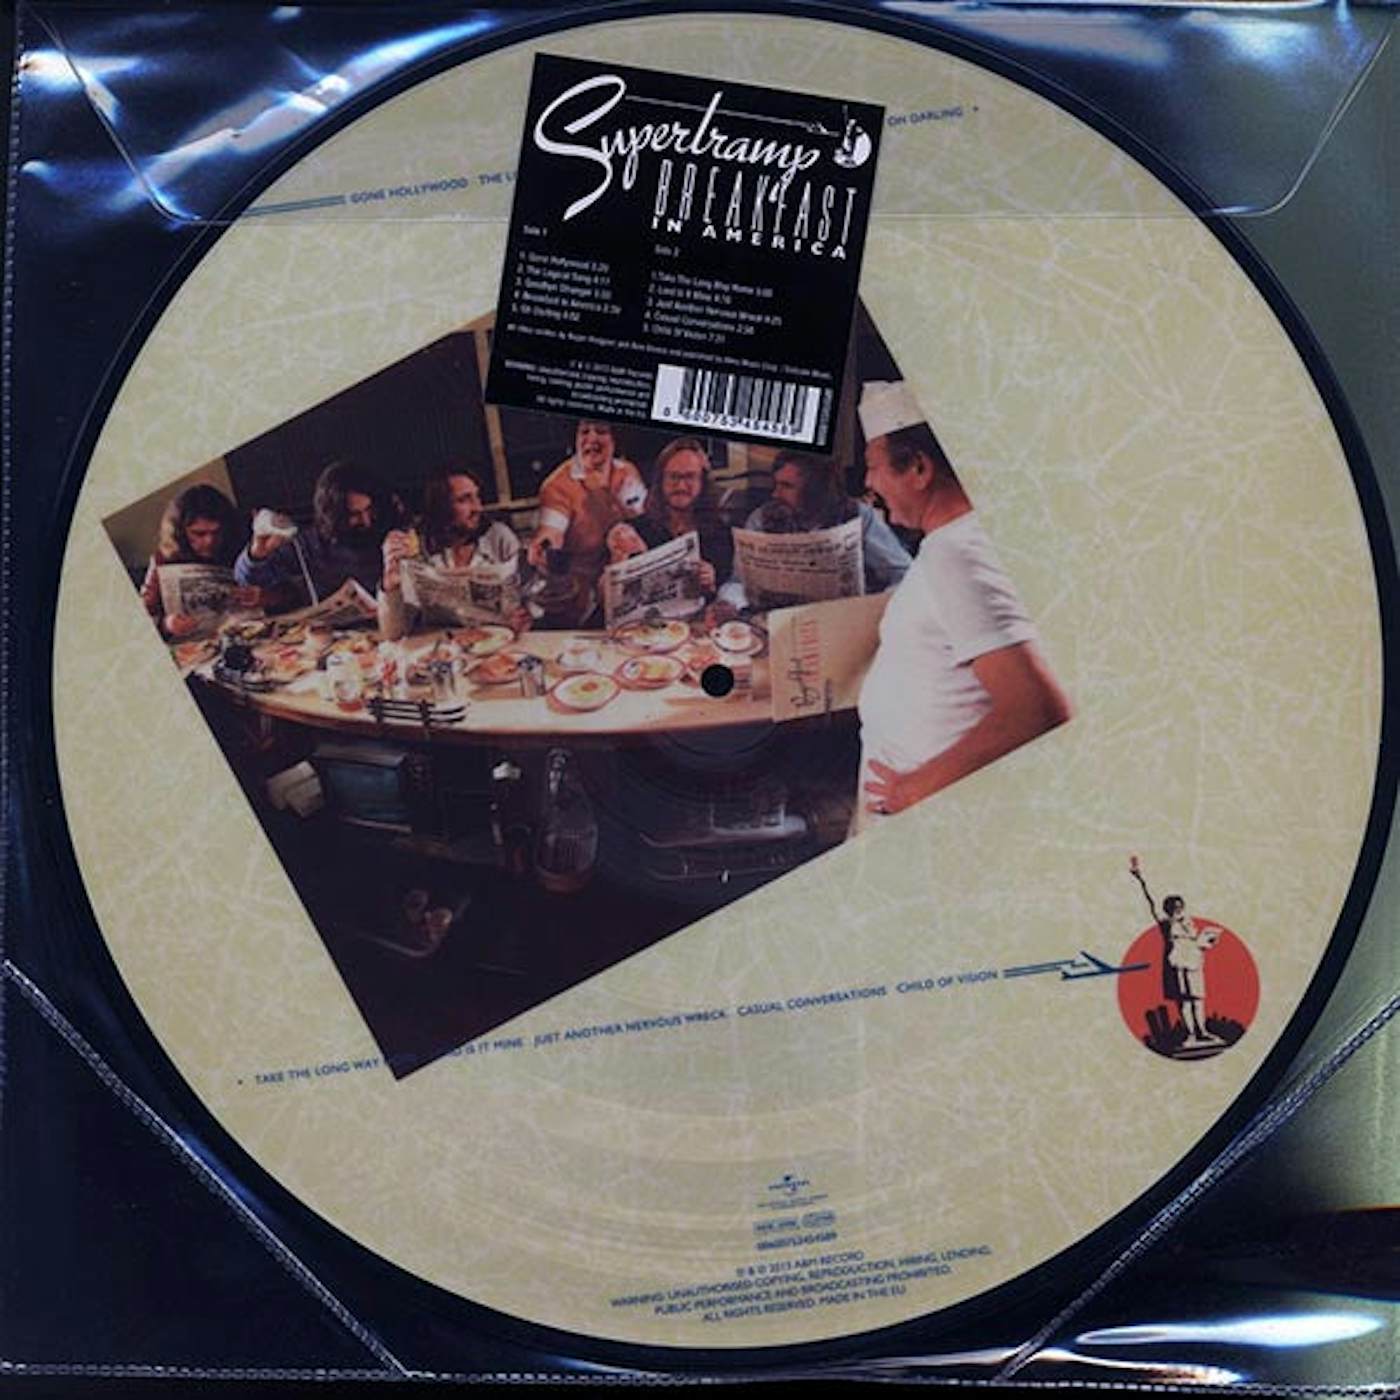 Supertramp LP Vinyl Record - Breakfast In America (Picture Disc)